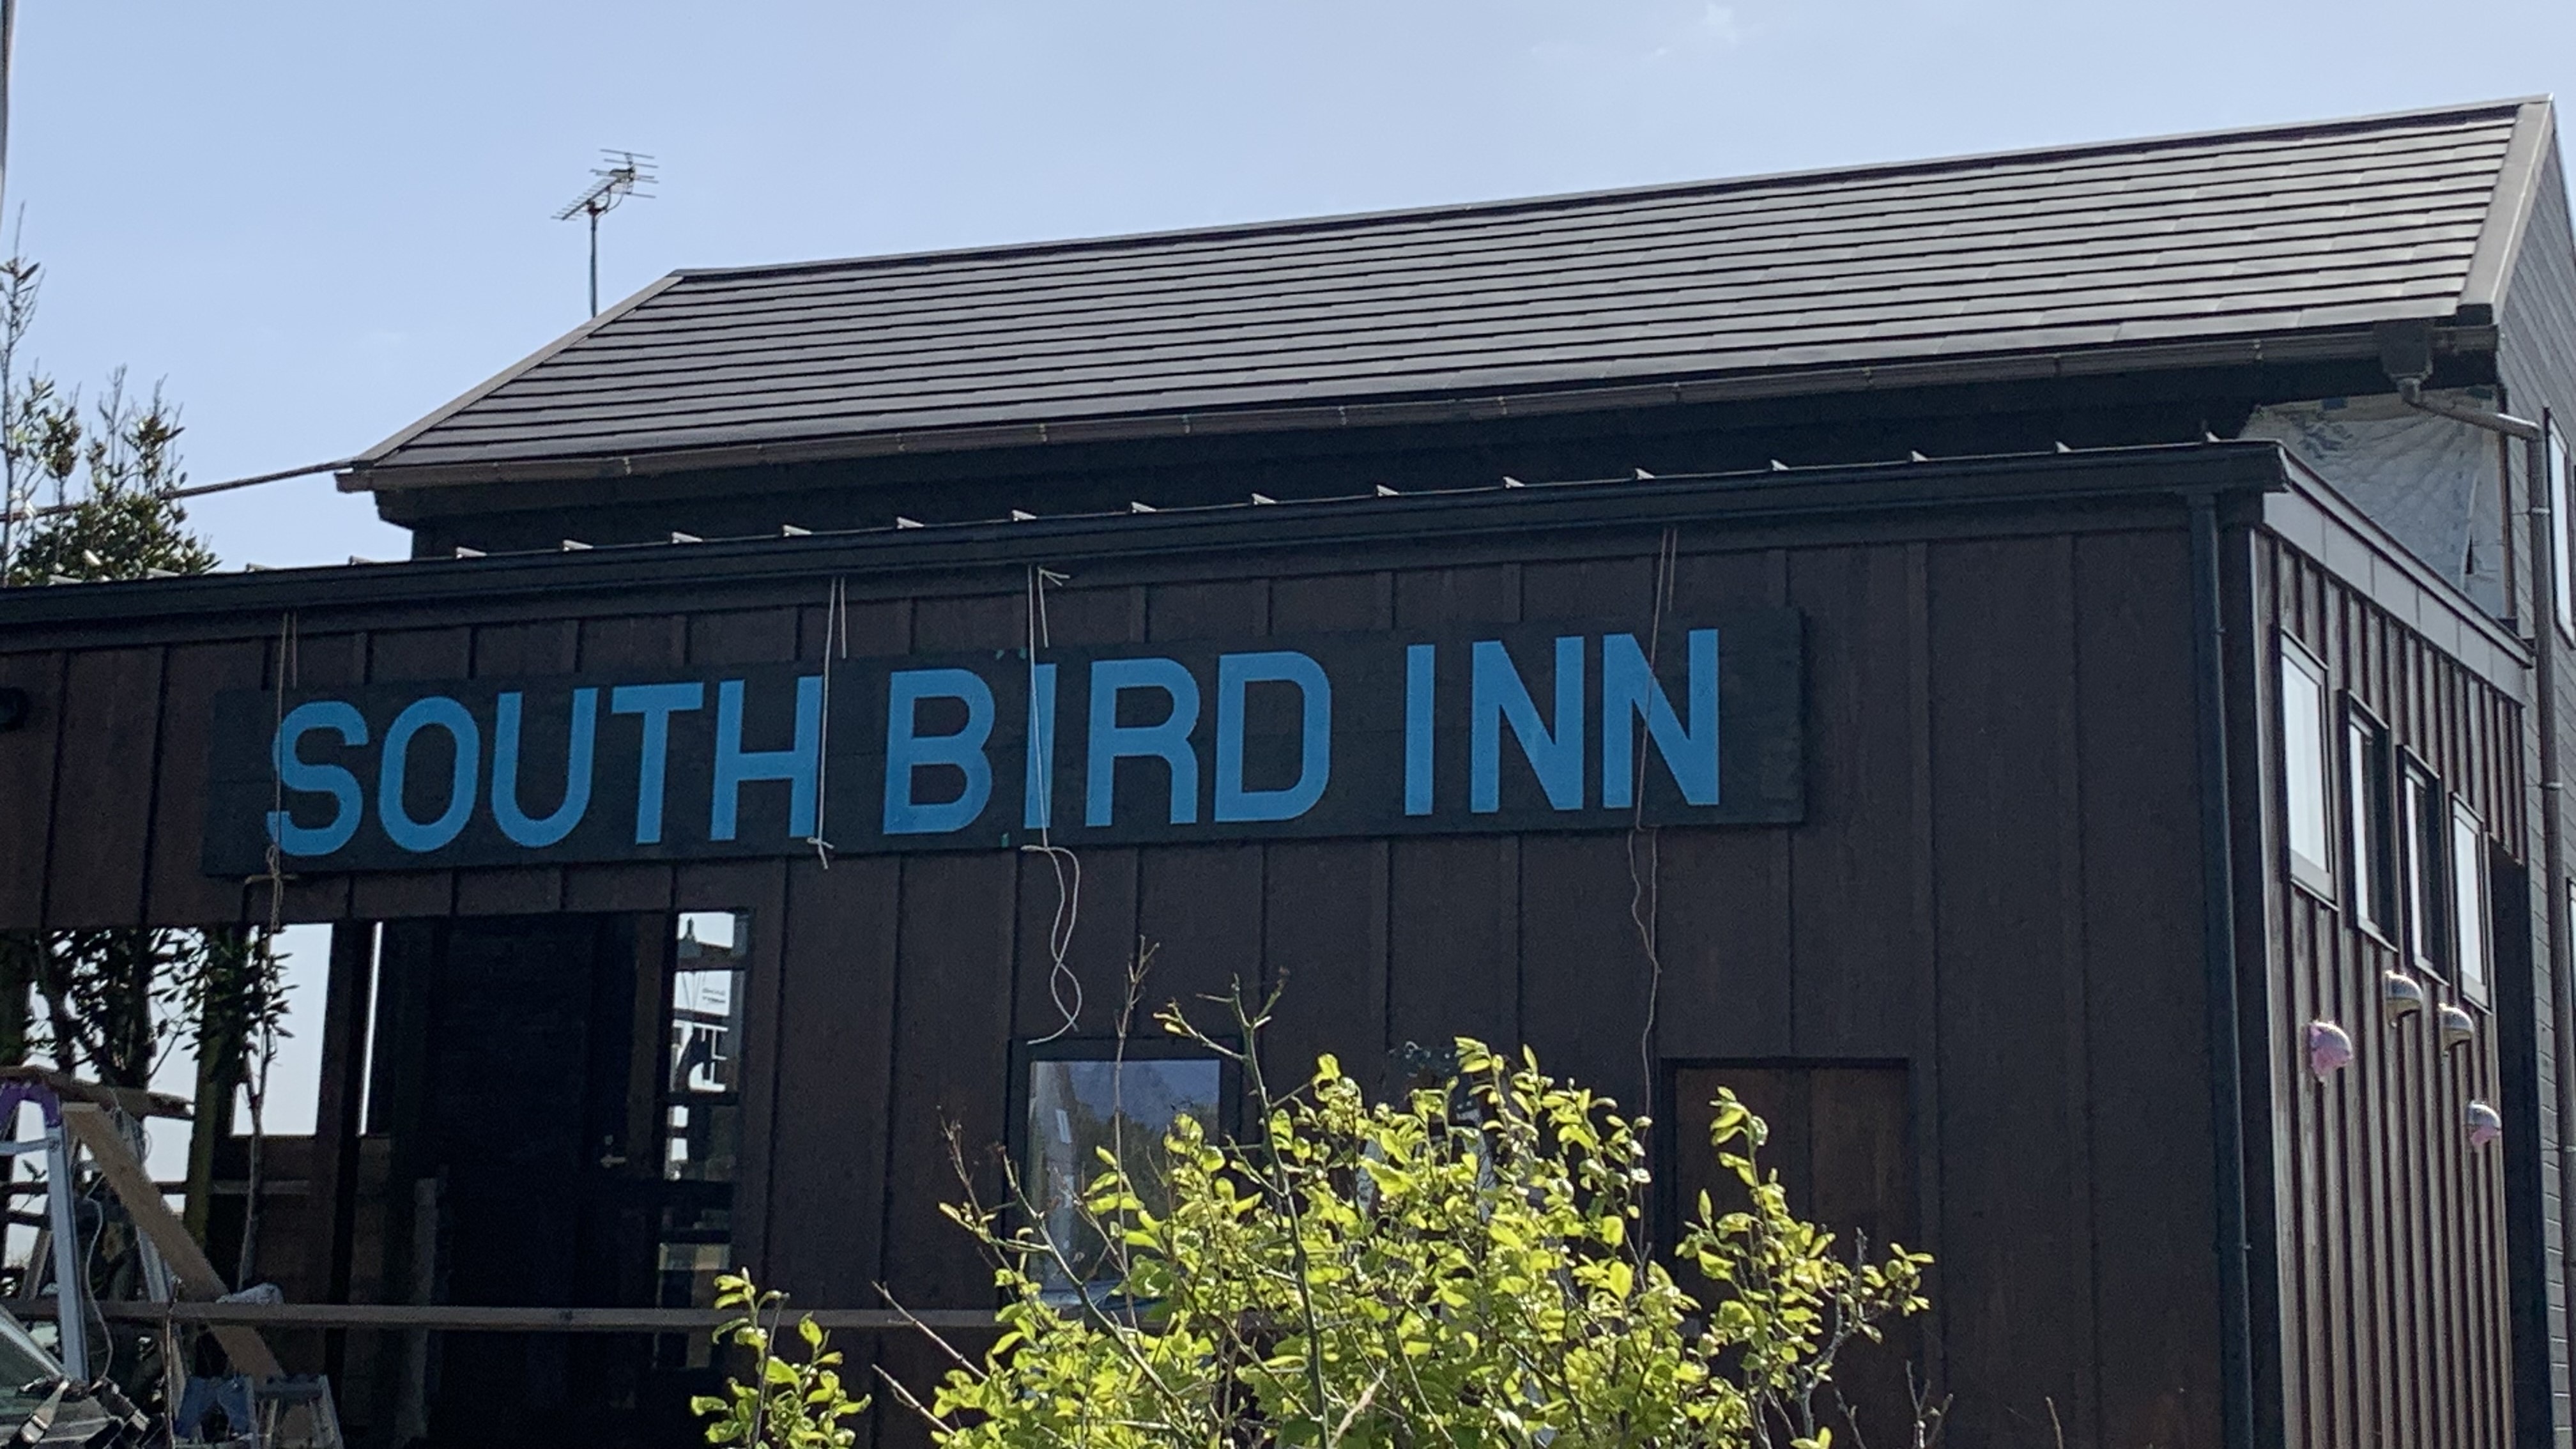 South Bird Inn